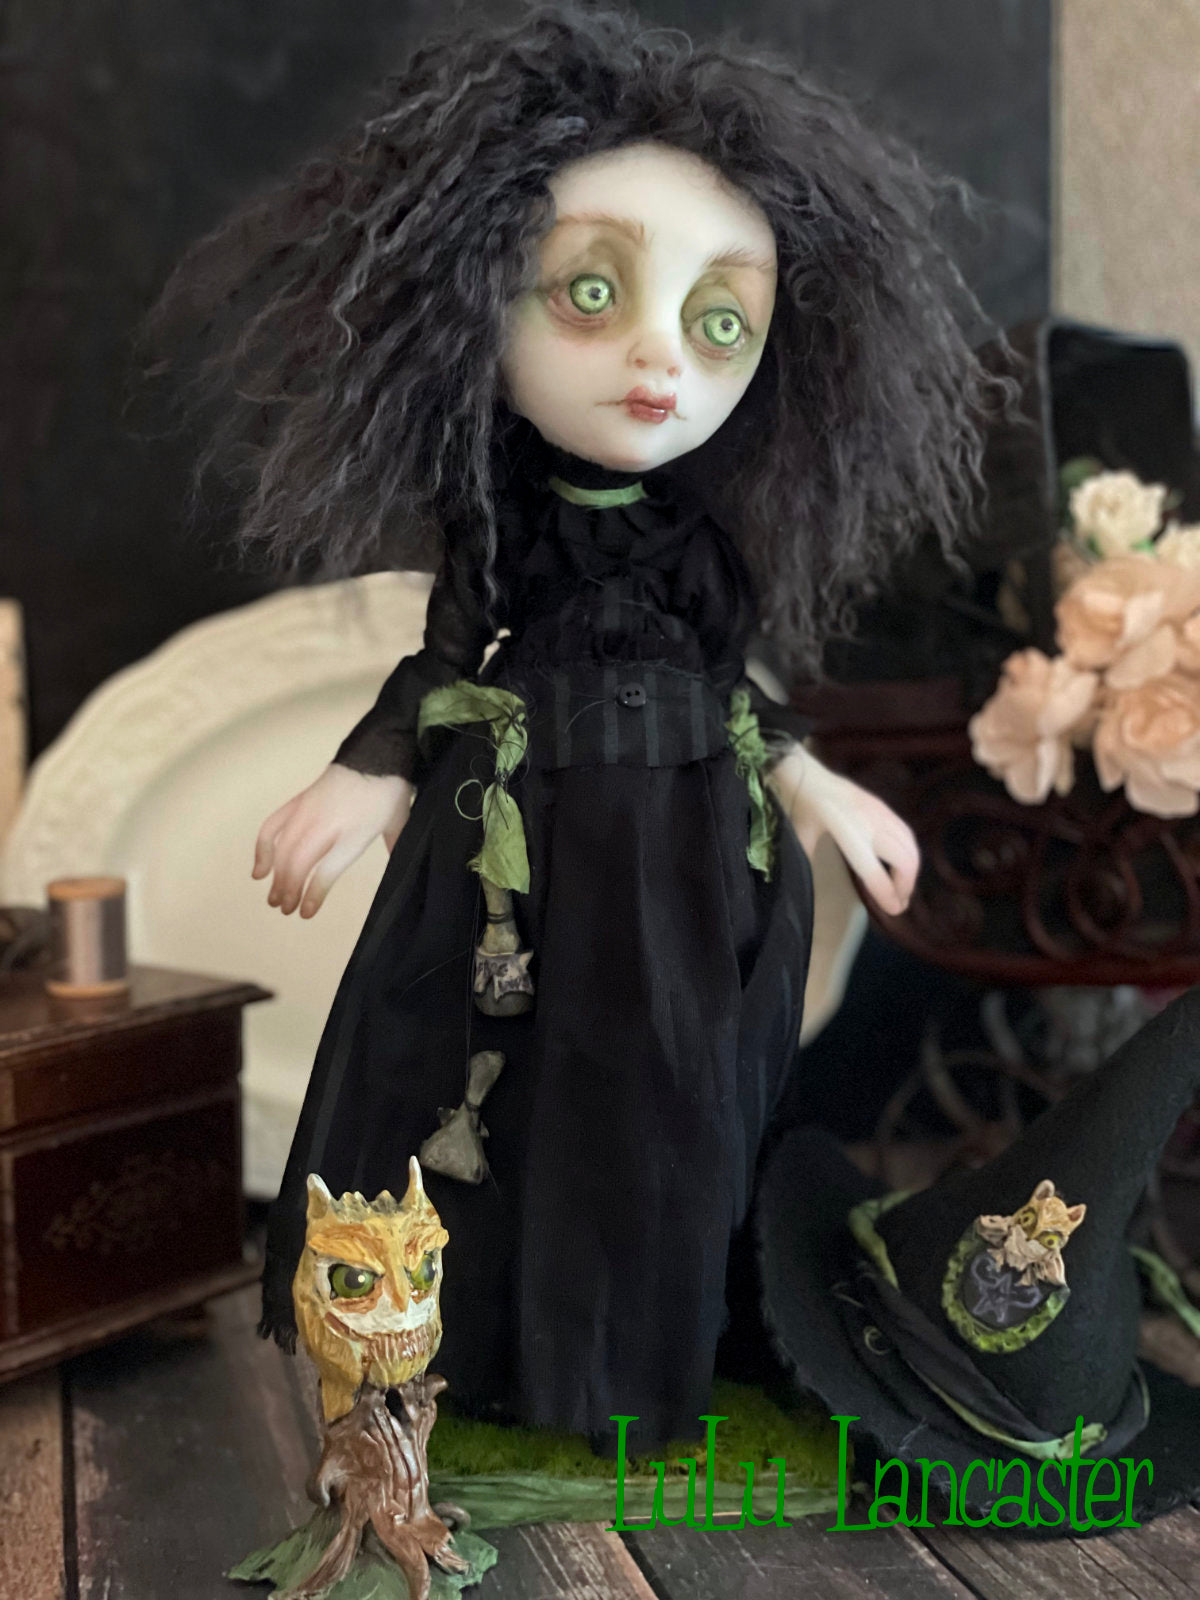 Moss and Grimmia Owl Witchery Original LuLu Lancaster Halloween Art Dolls